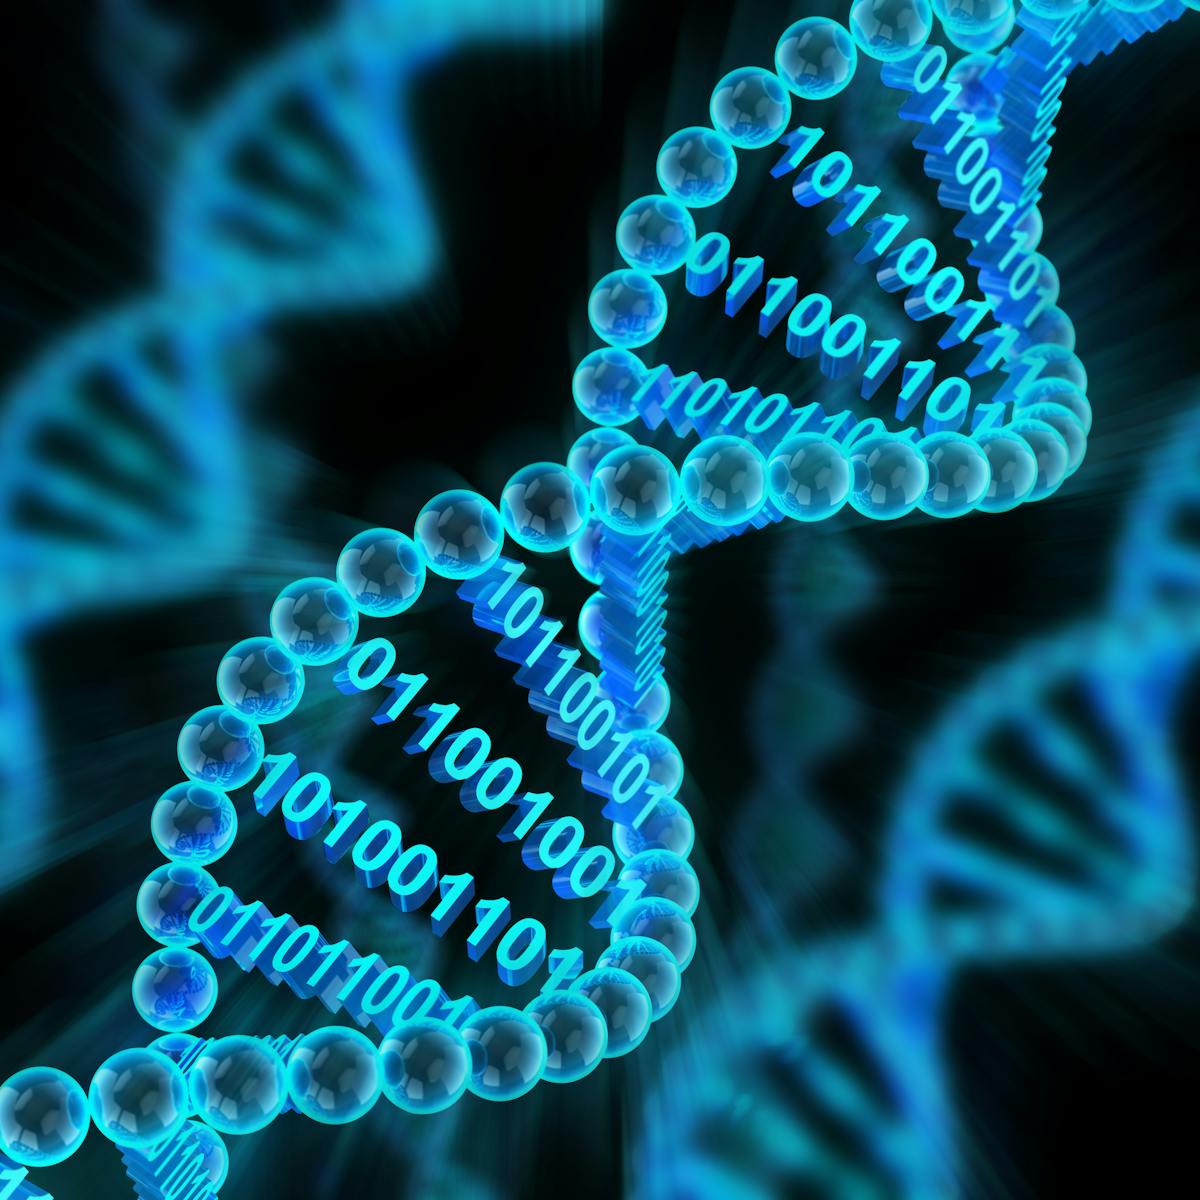 eindeloos Afkeer open haard Storing data in DNA brings nature into the digital universe